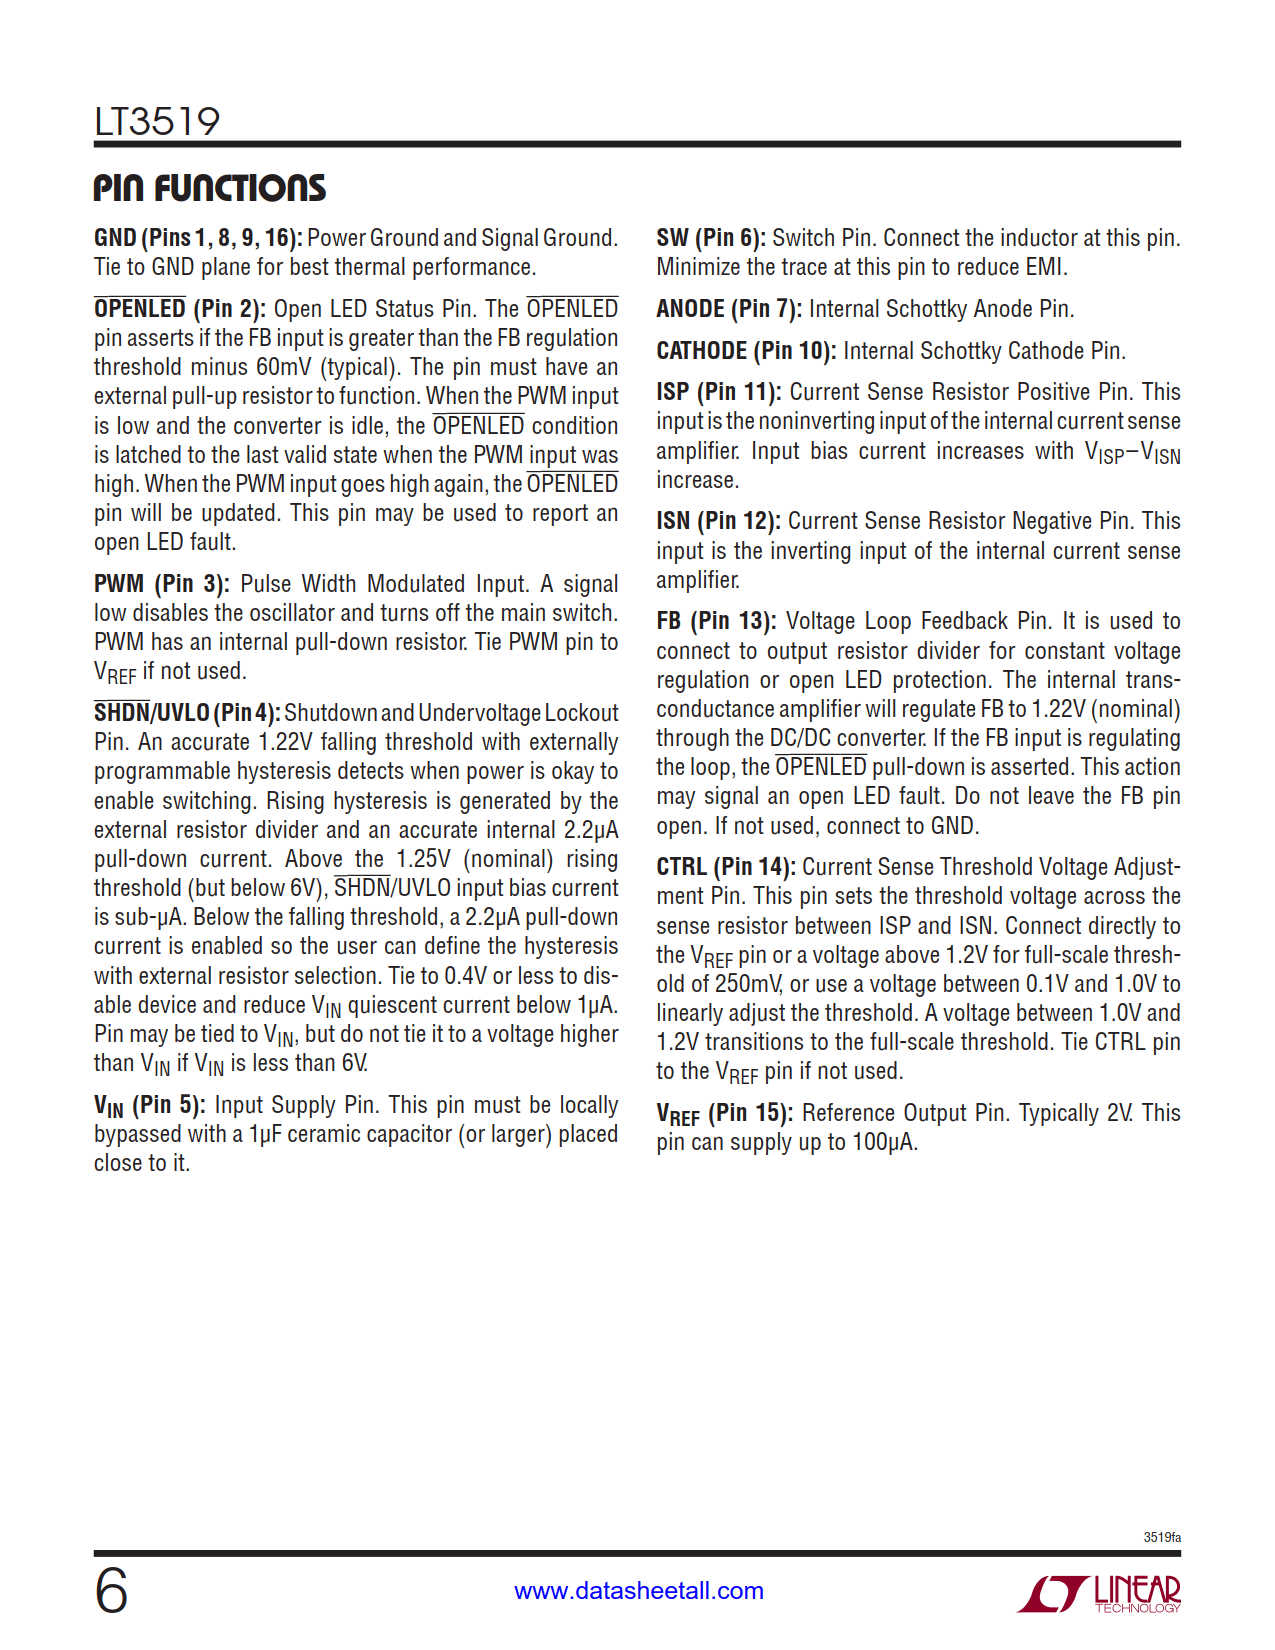 LT3519 Datasheet Page 6